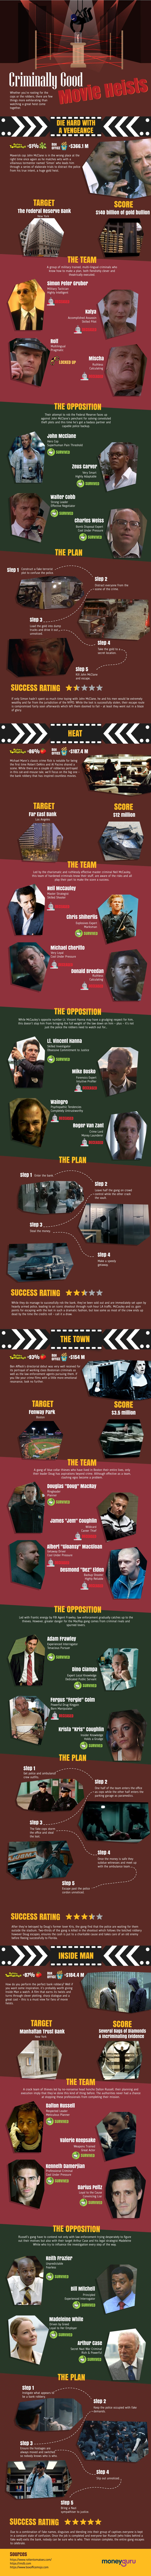 Criminally Good Movie Heists #infographic